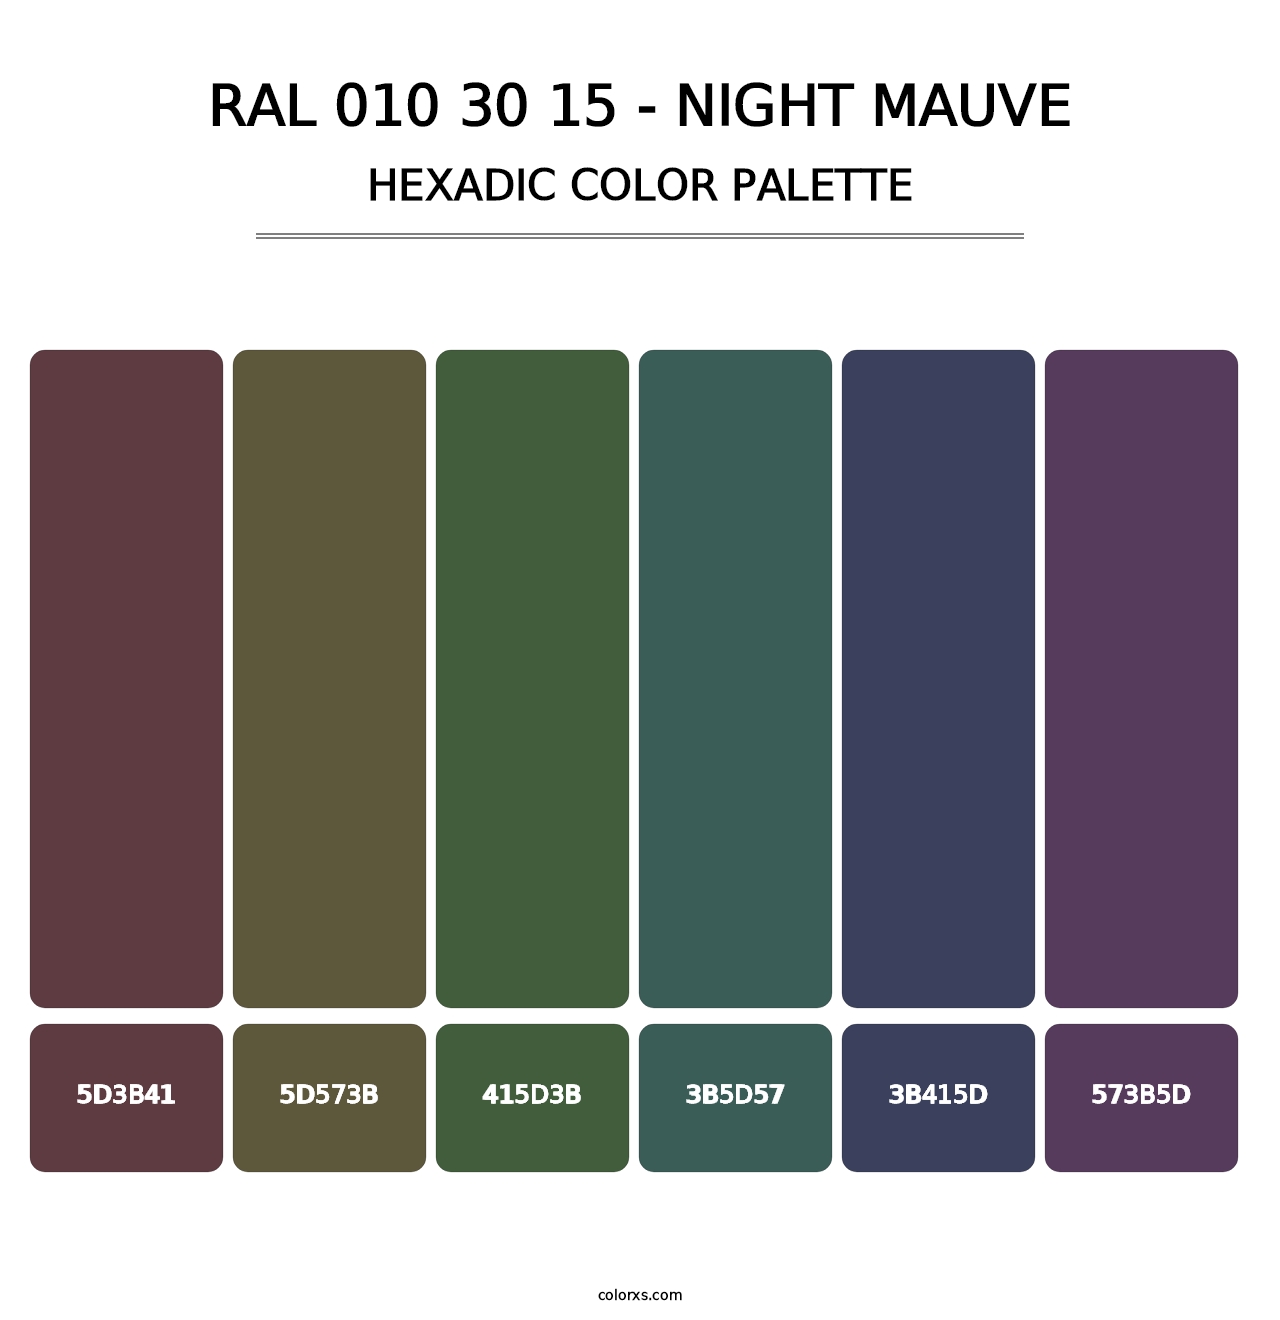 RAL 010 30 15 - Night Mauve - Hexadic Color Palette